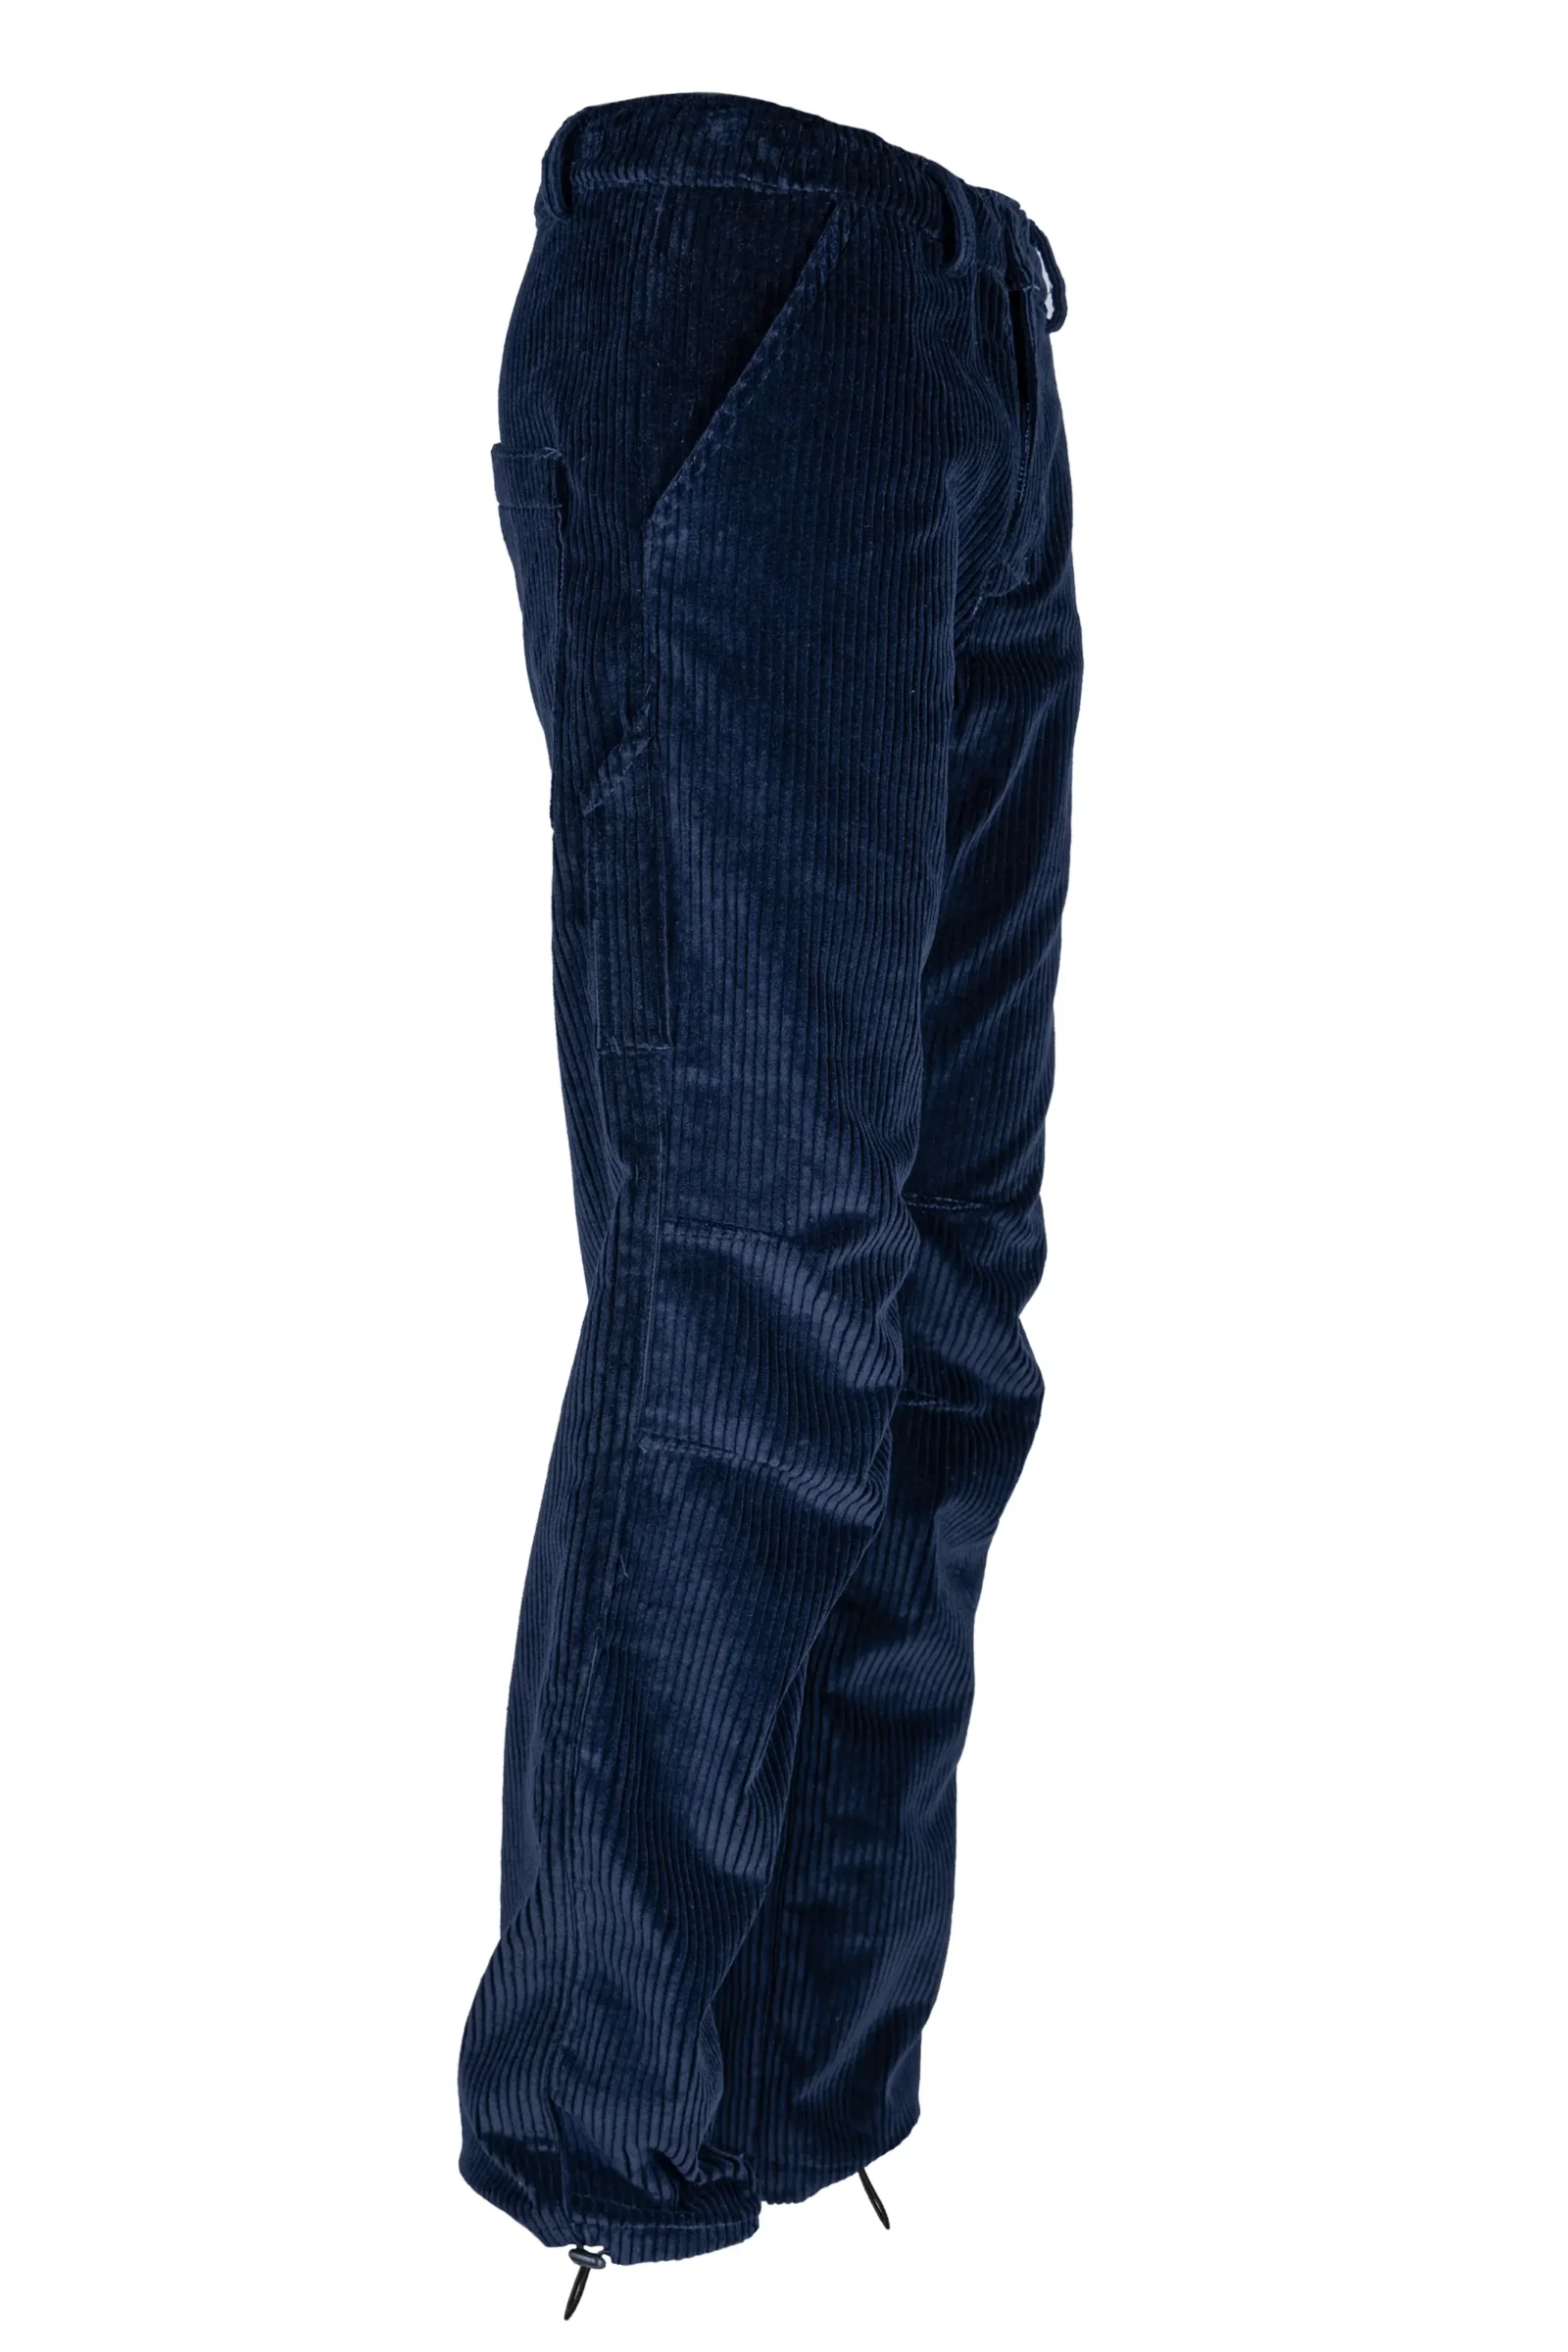 Pantalon homme - velours côtelé moyen - bleu - GRILLO MONVIC